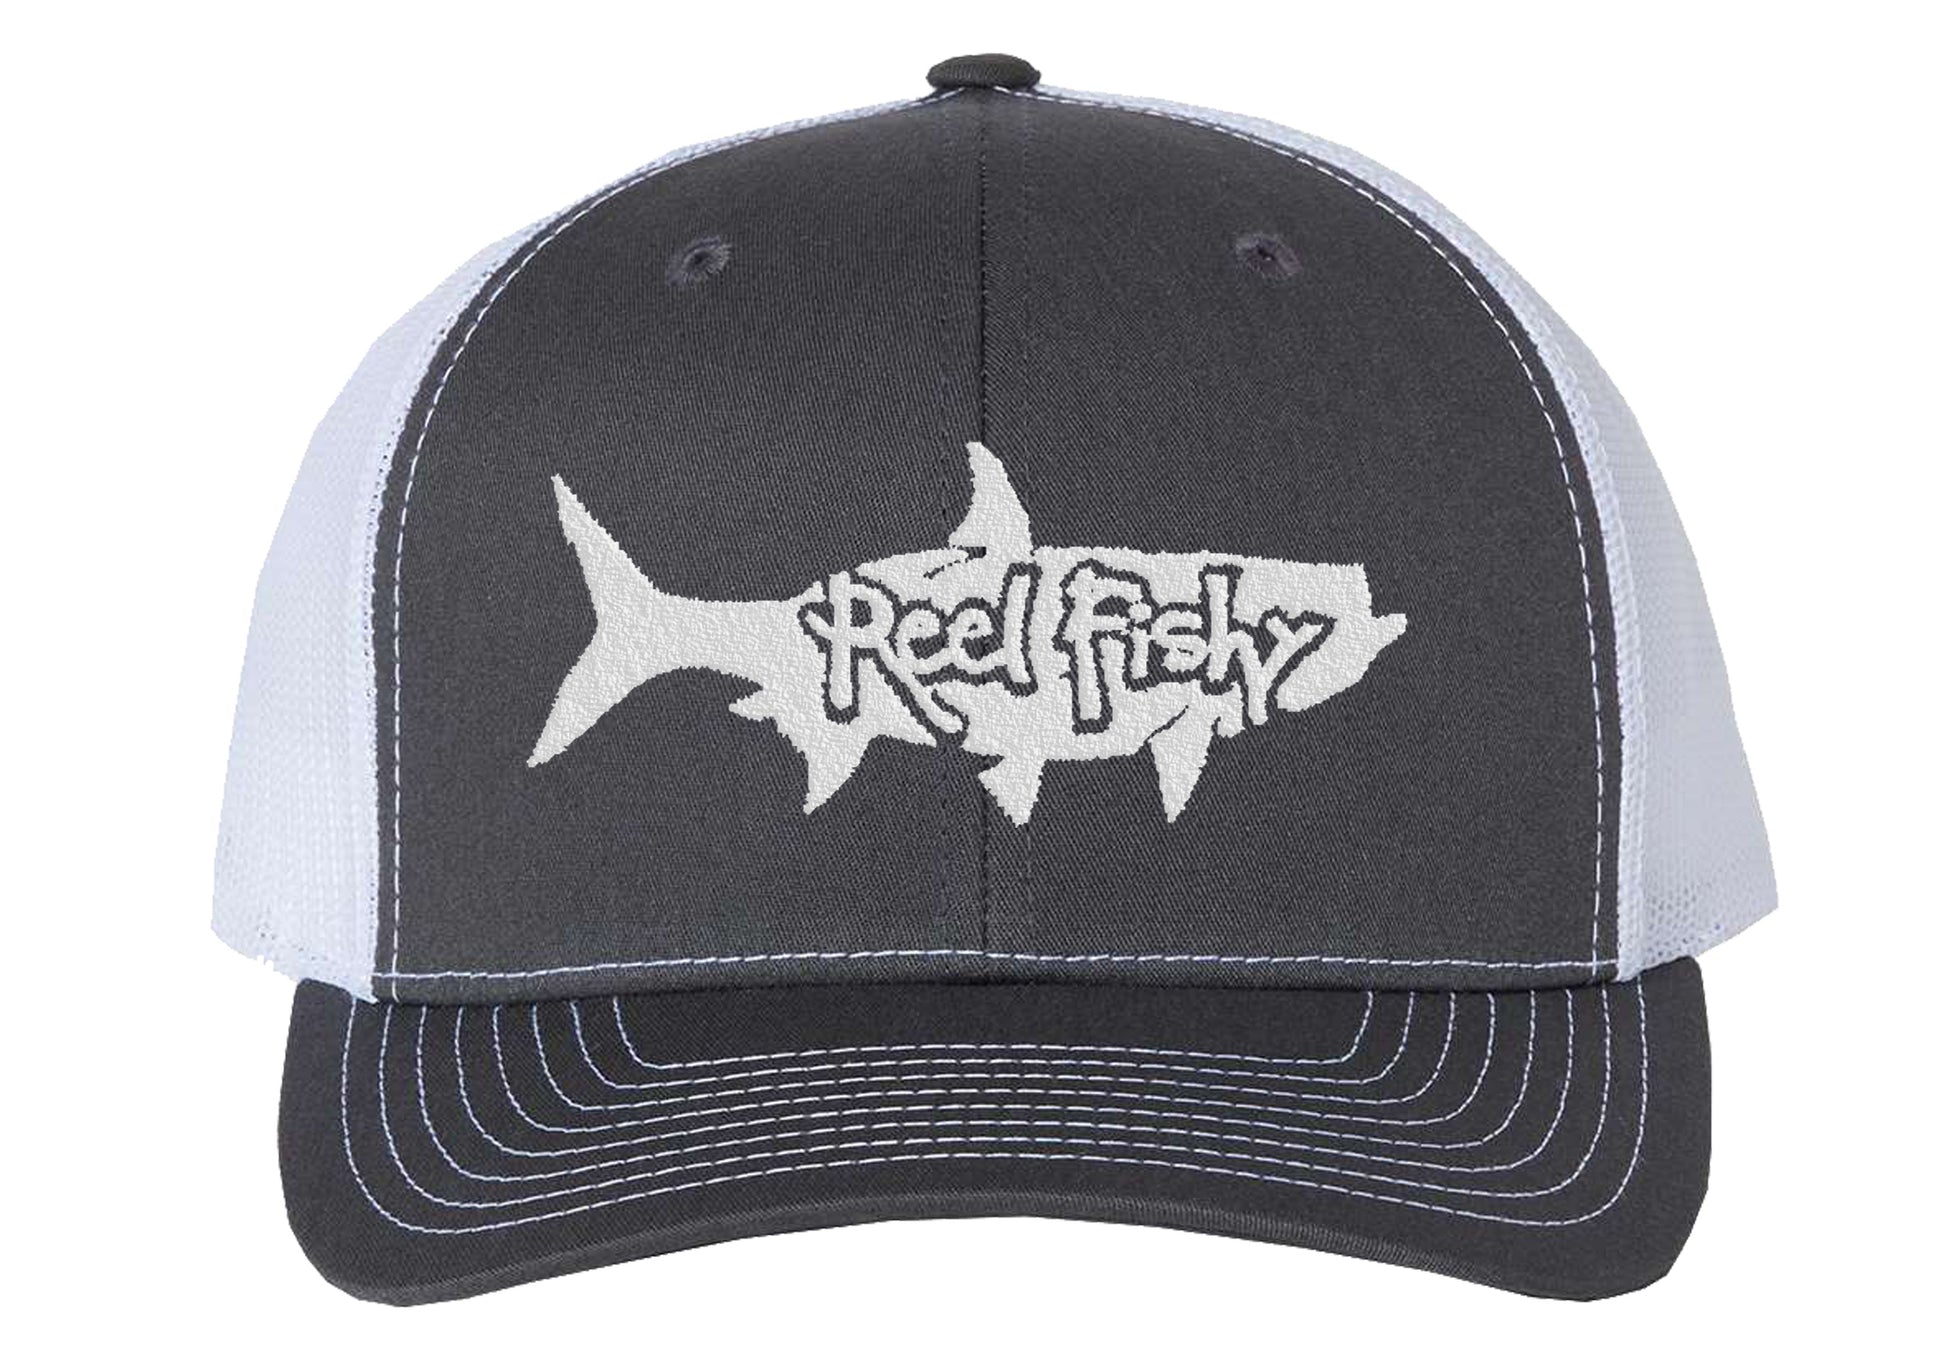 Tarpon Fishing Trucker Hats, Fishing Snapback Trucker Cap - Reel Fishy Black w/White Tarpon Logo